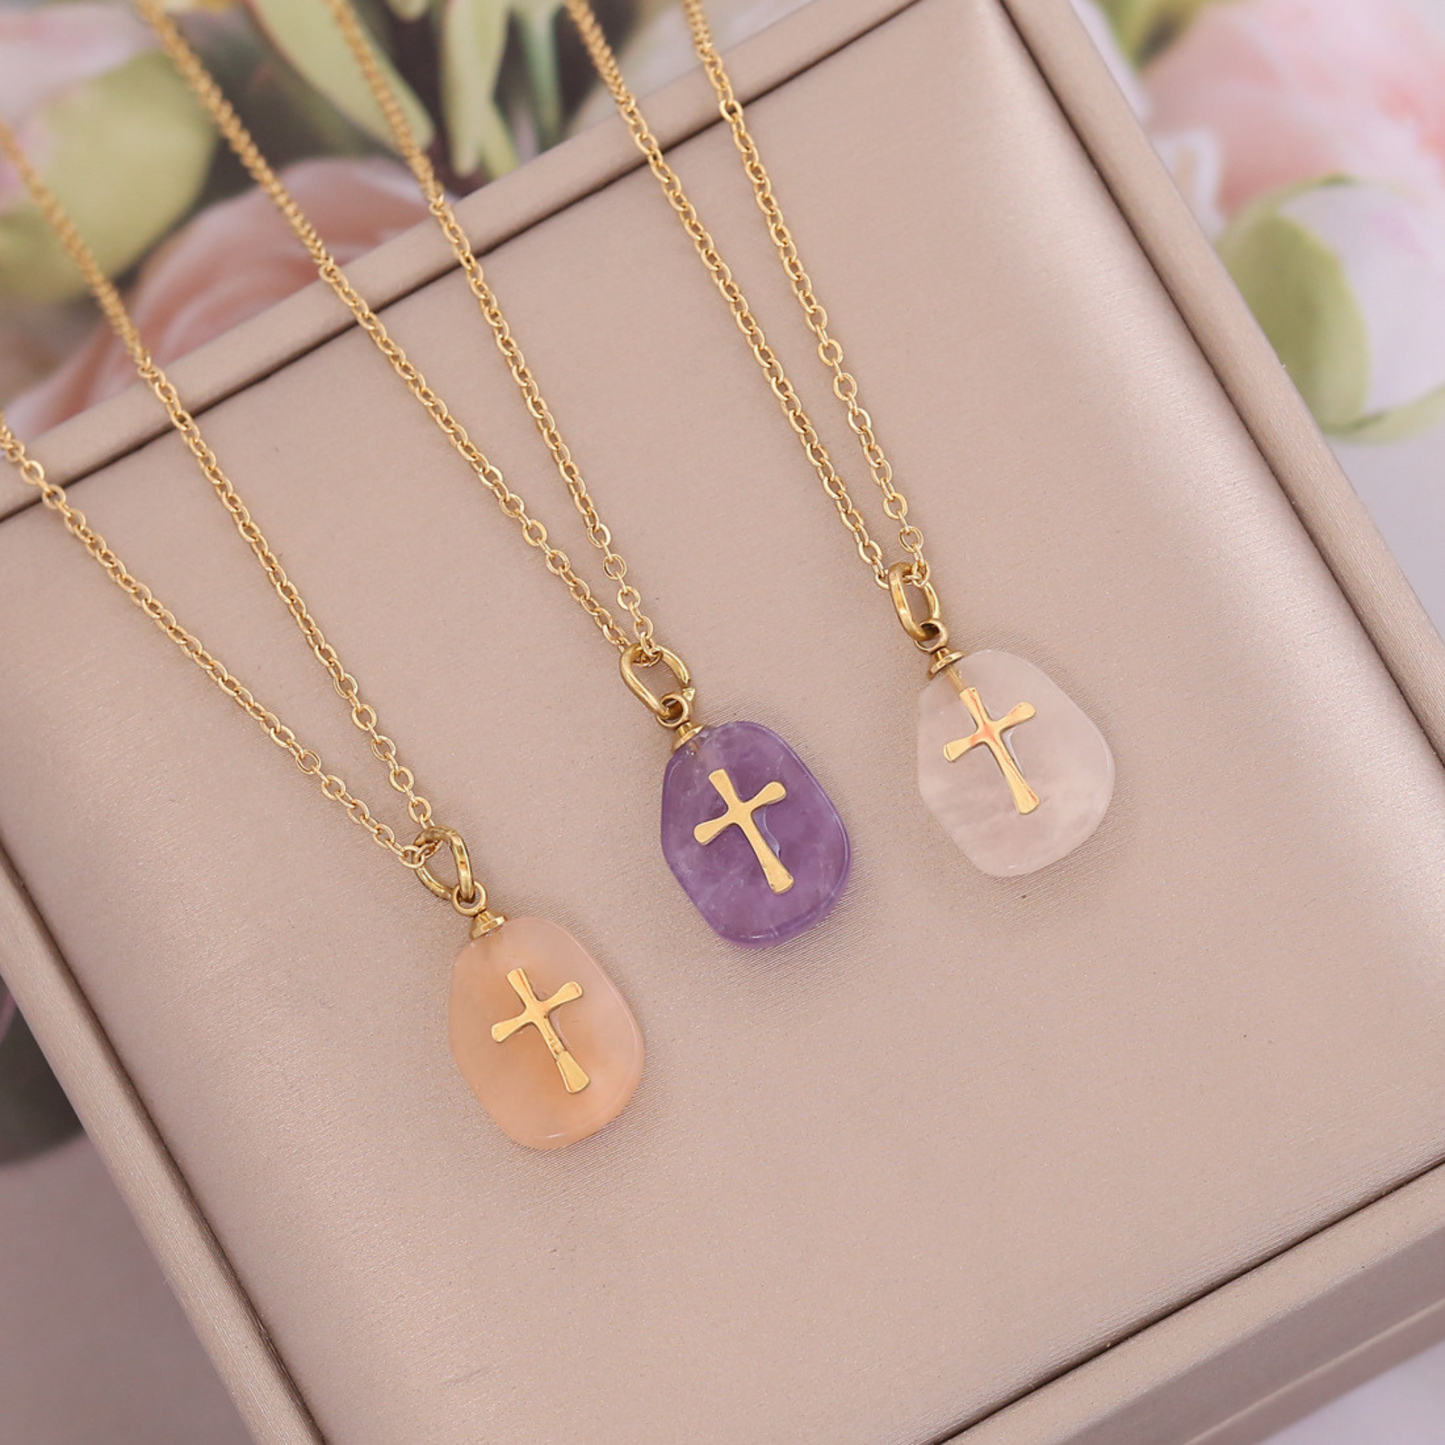 Statement Cross Gemstone Pendant Necklaces for Women